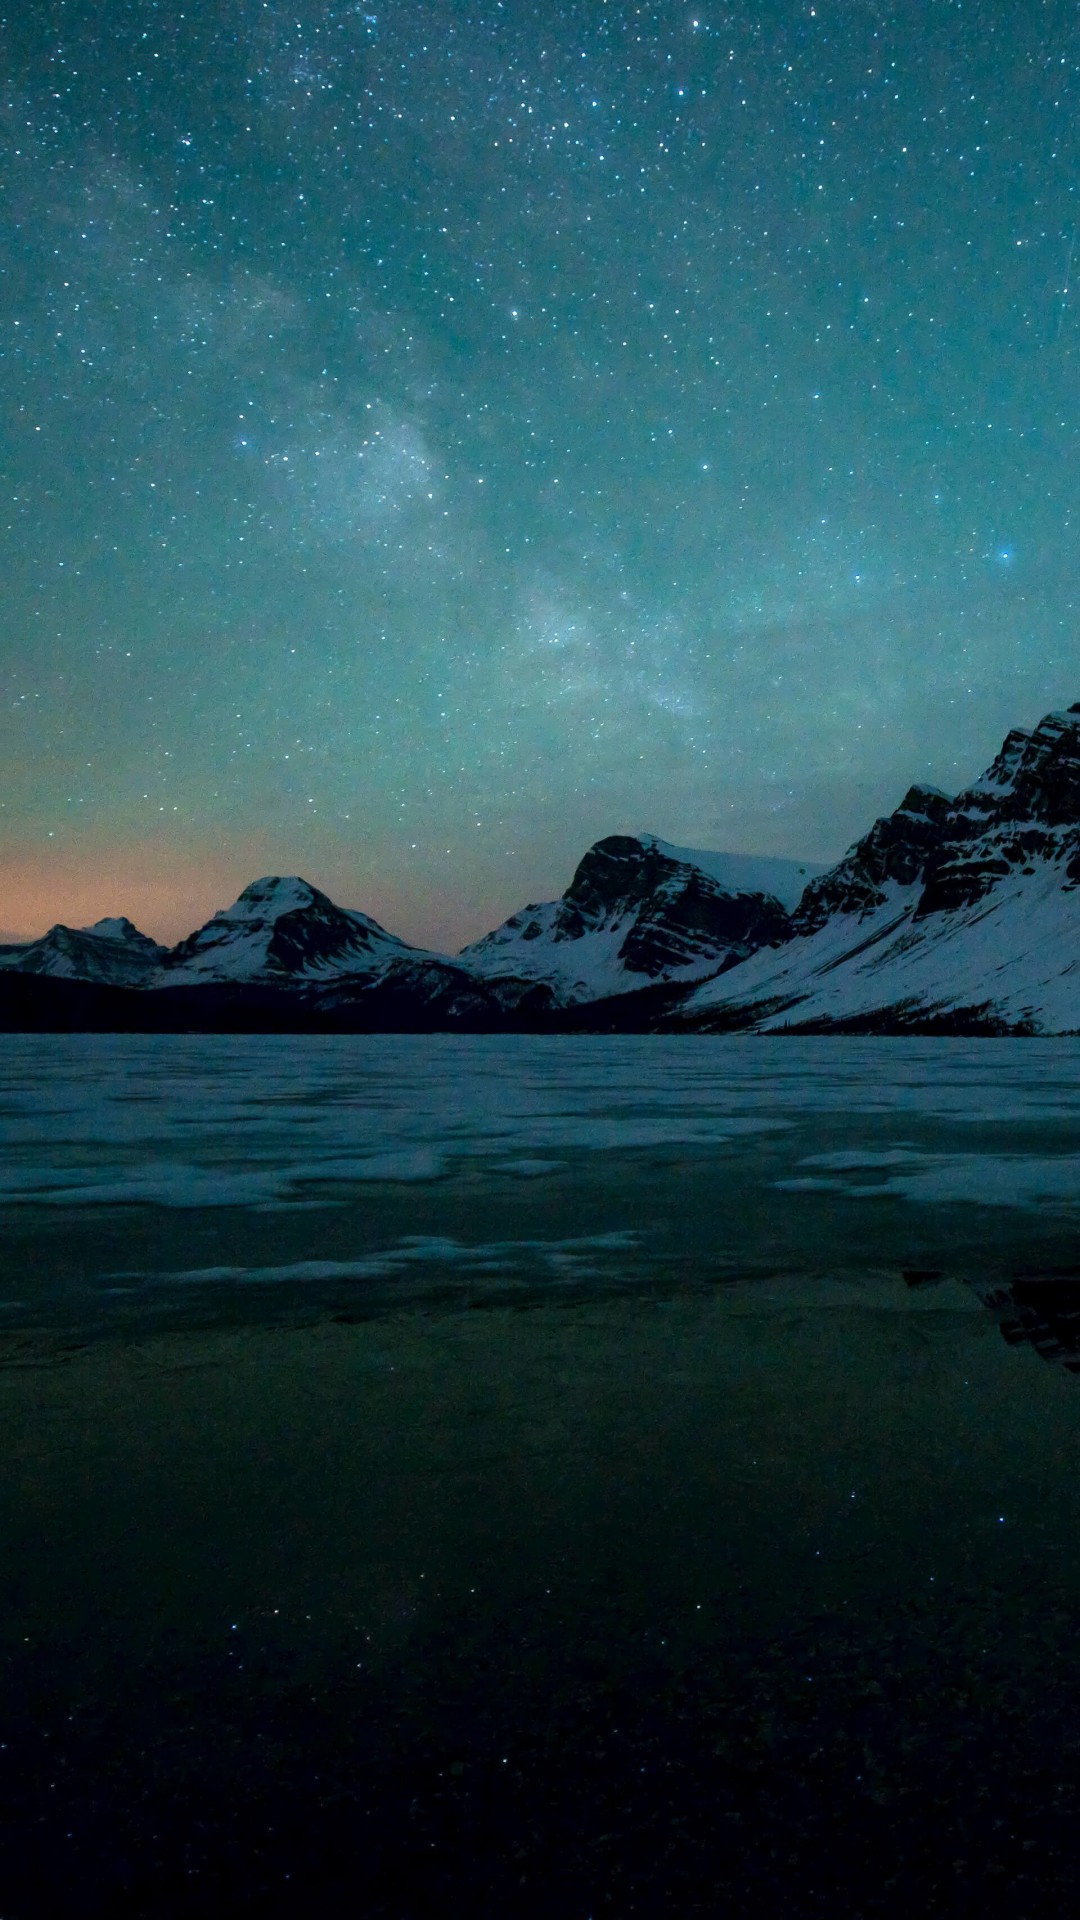 Milky Way over Bow Lake, Alberta, Canada Wallpaper for Google Nexus 5